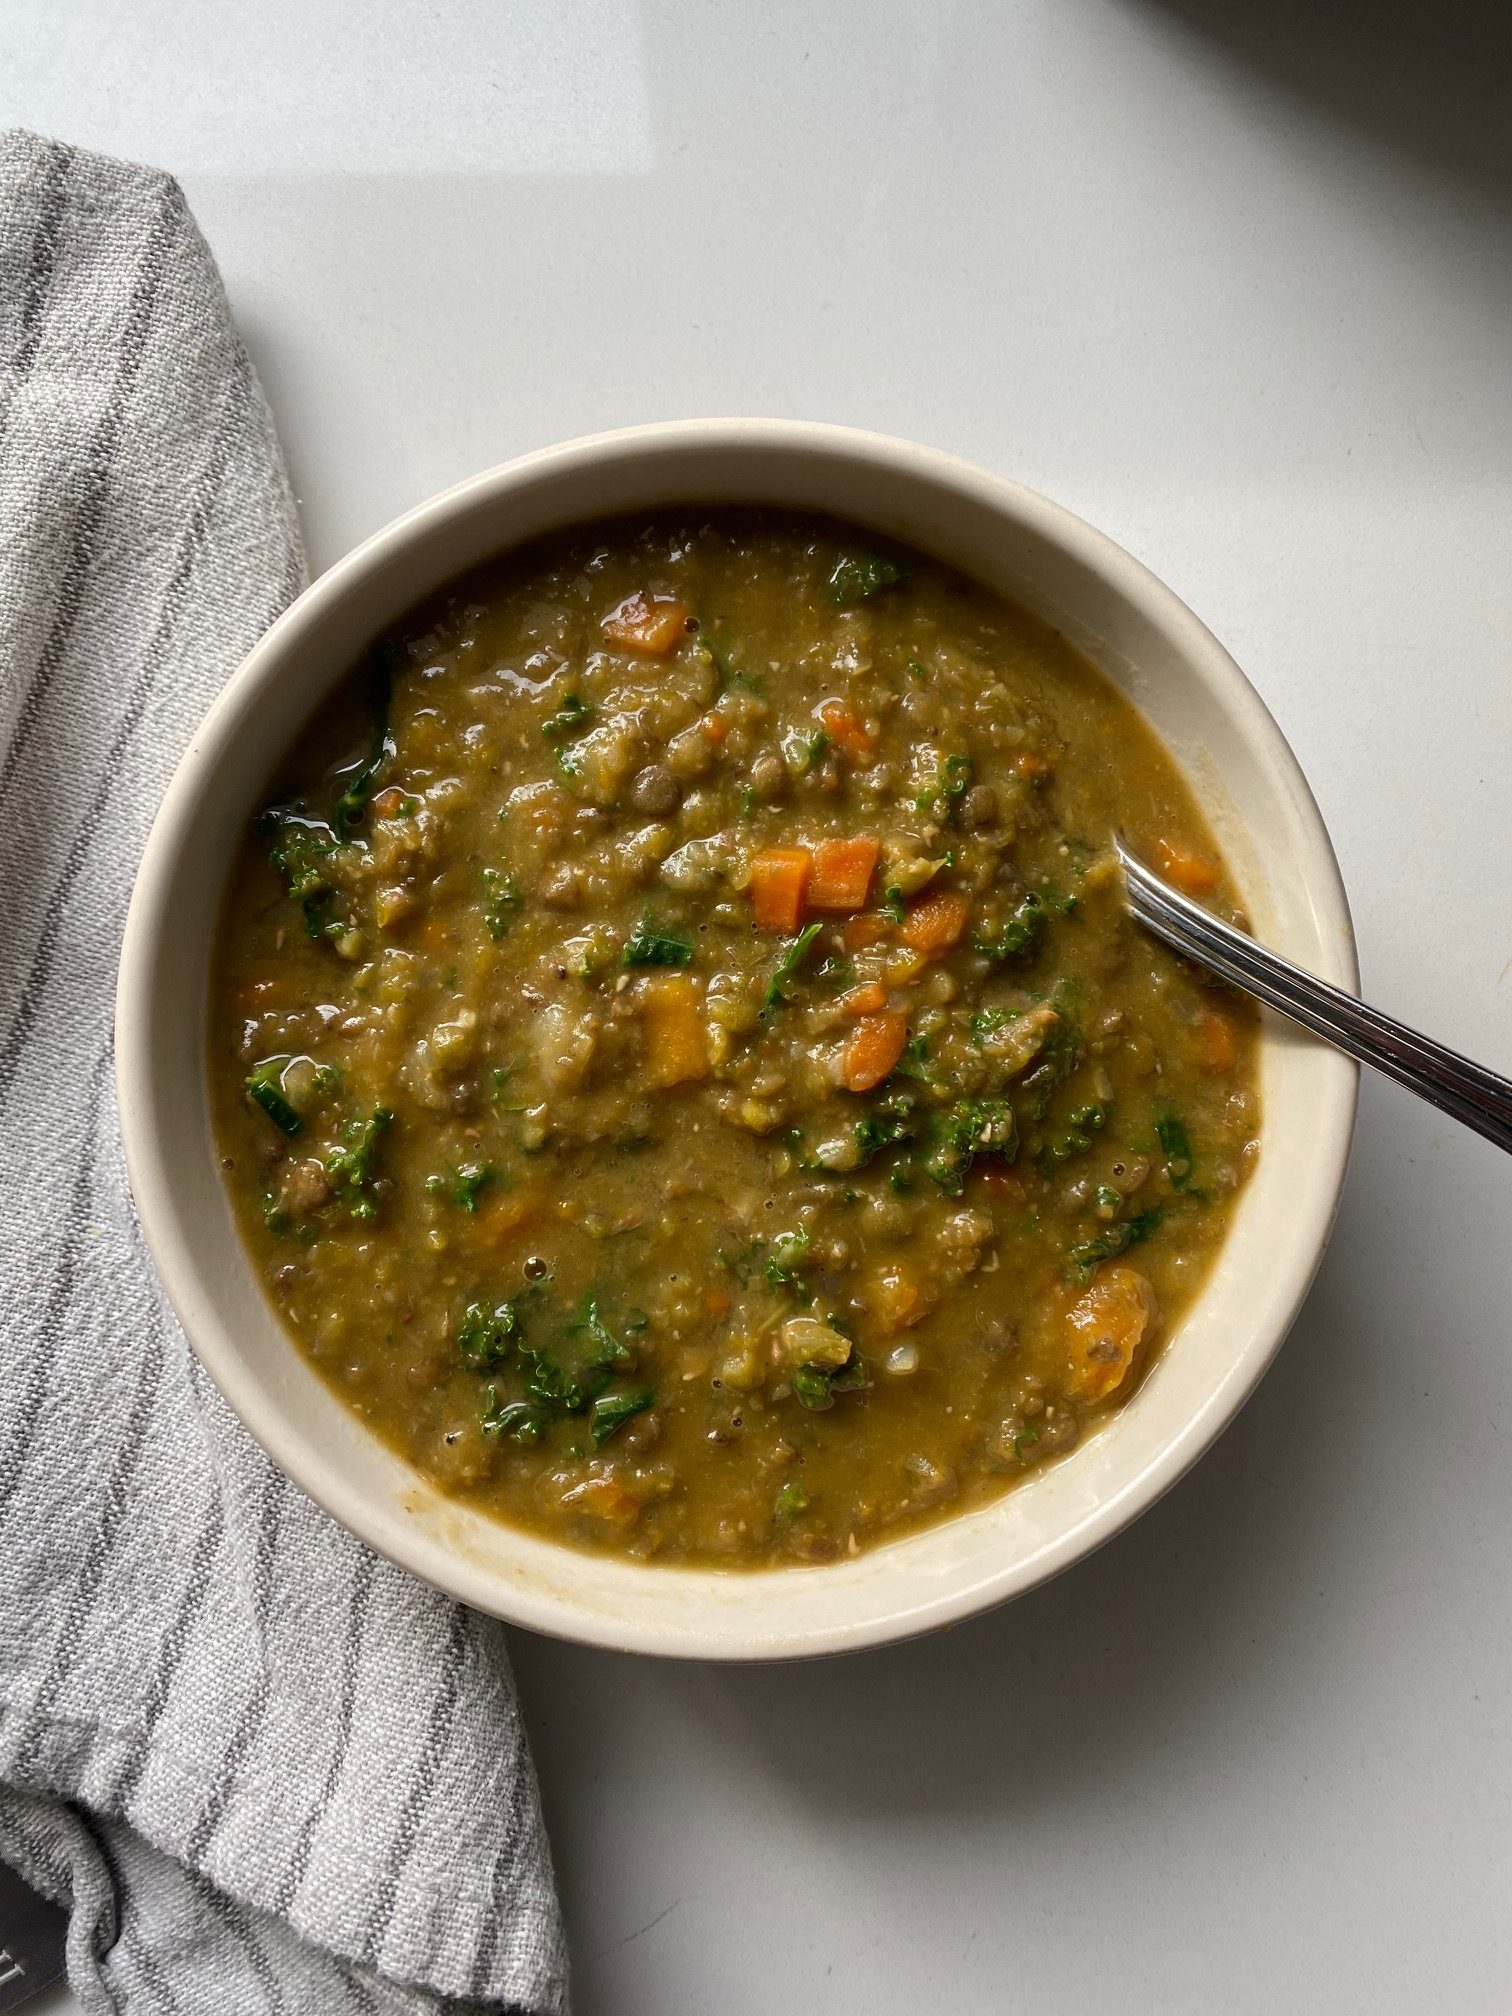 The Best Detox Crockpot Lentil Soup Recipe - Pinch of Yum